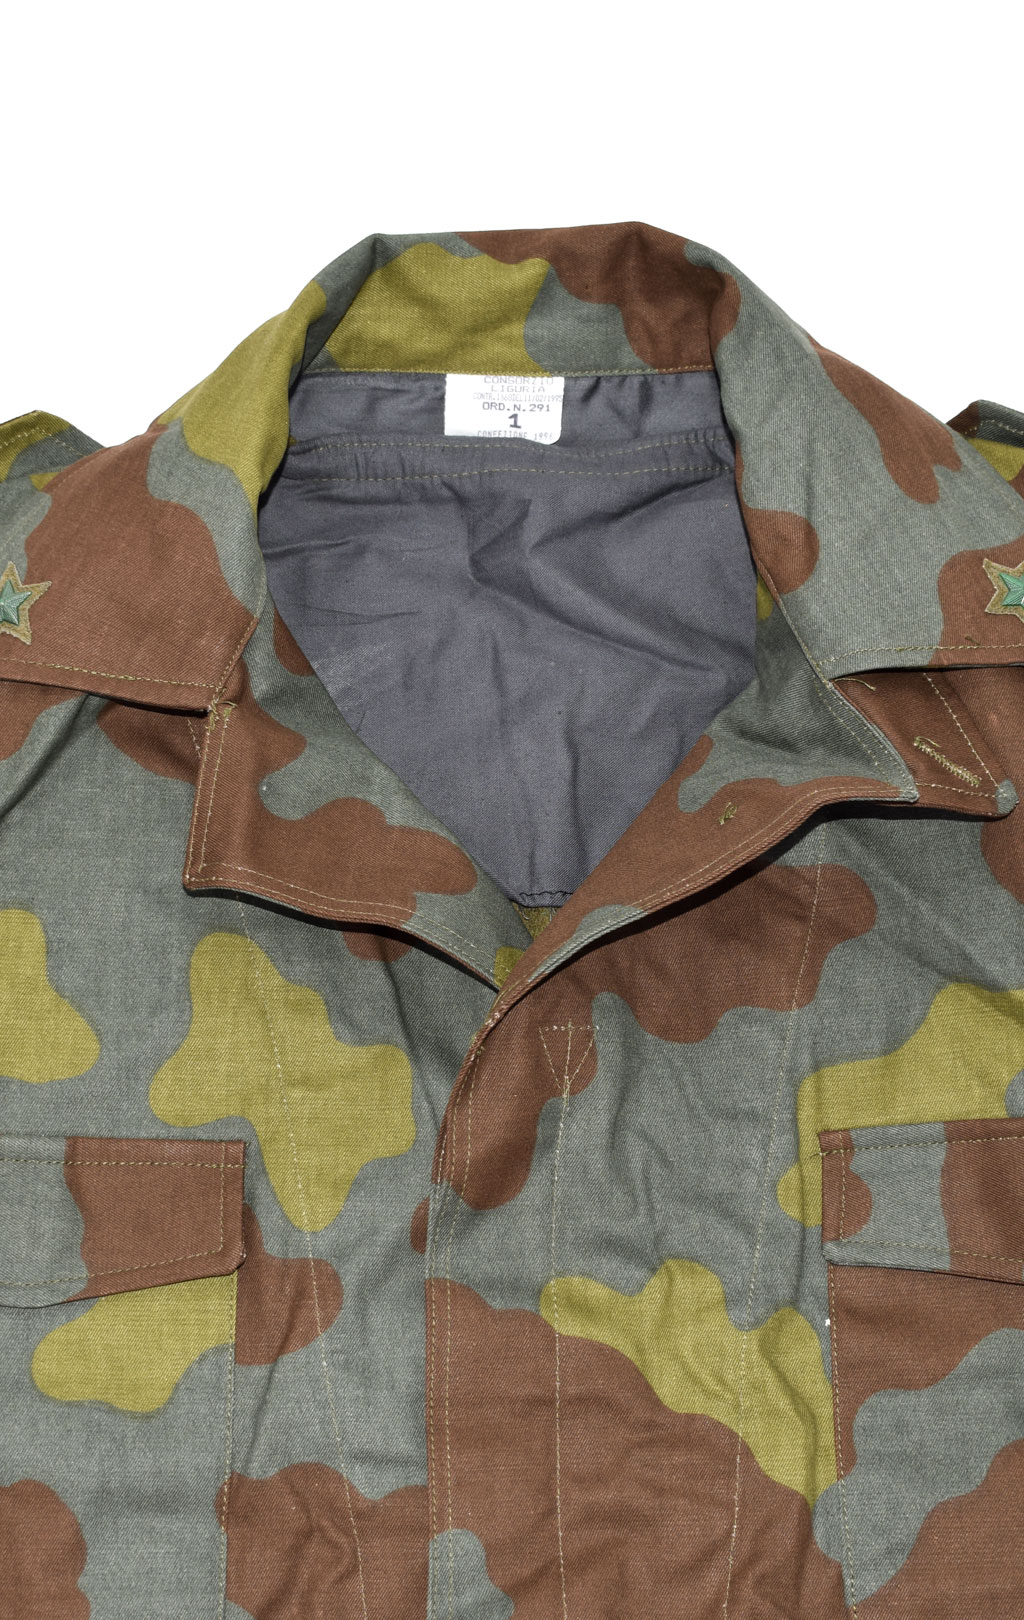 Куртка Batalion San Marco старого образца с подстёжкой camo Италия